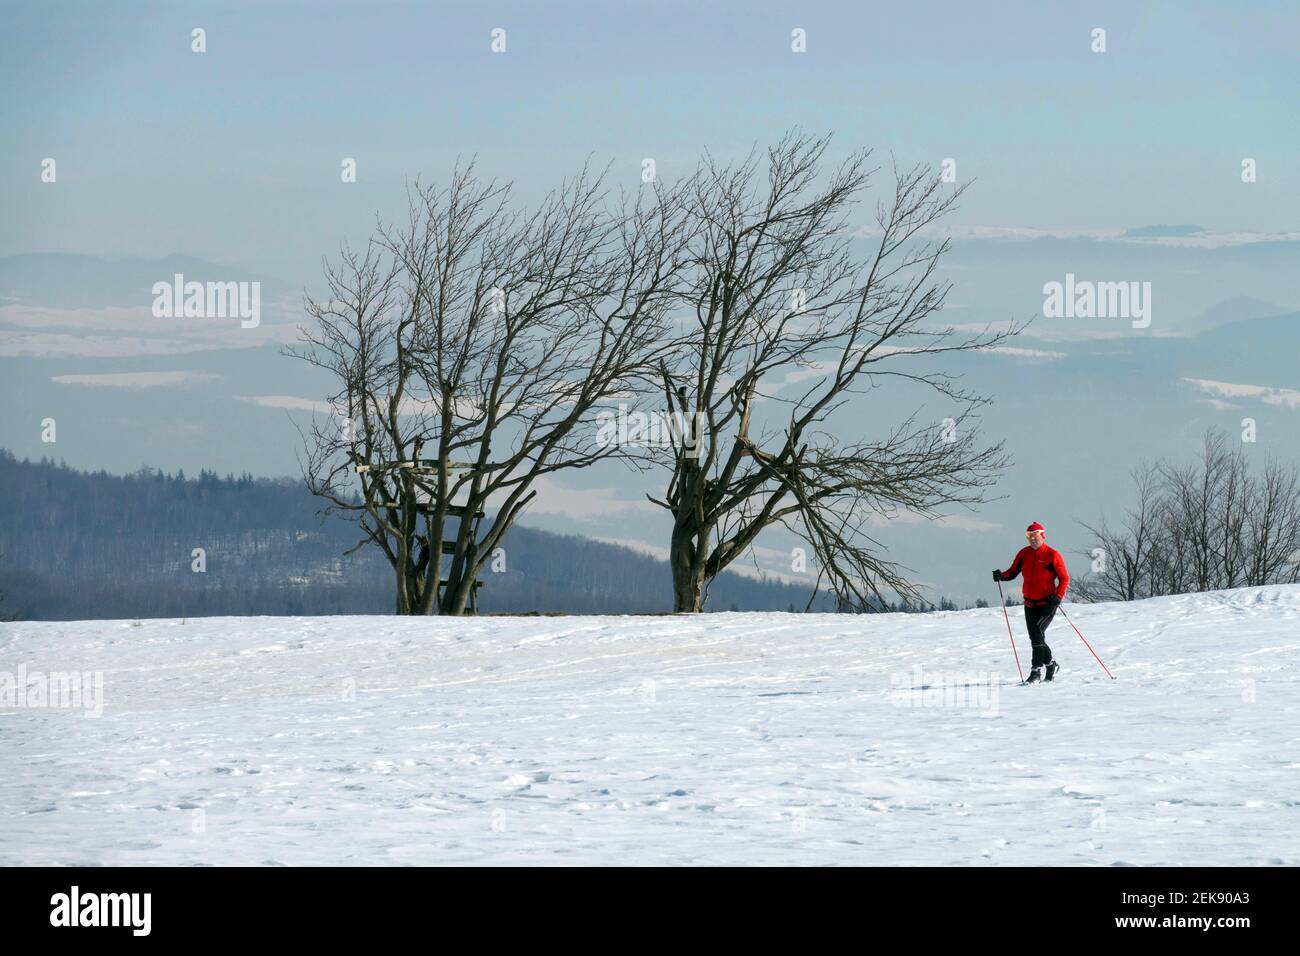 Snow scene red skier skiing in the snowy countryside, winter scene Stock Photo